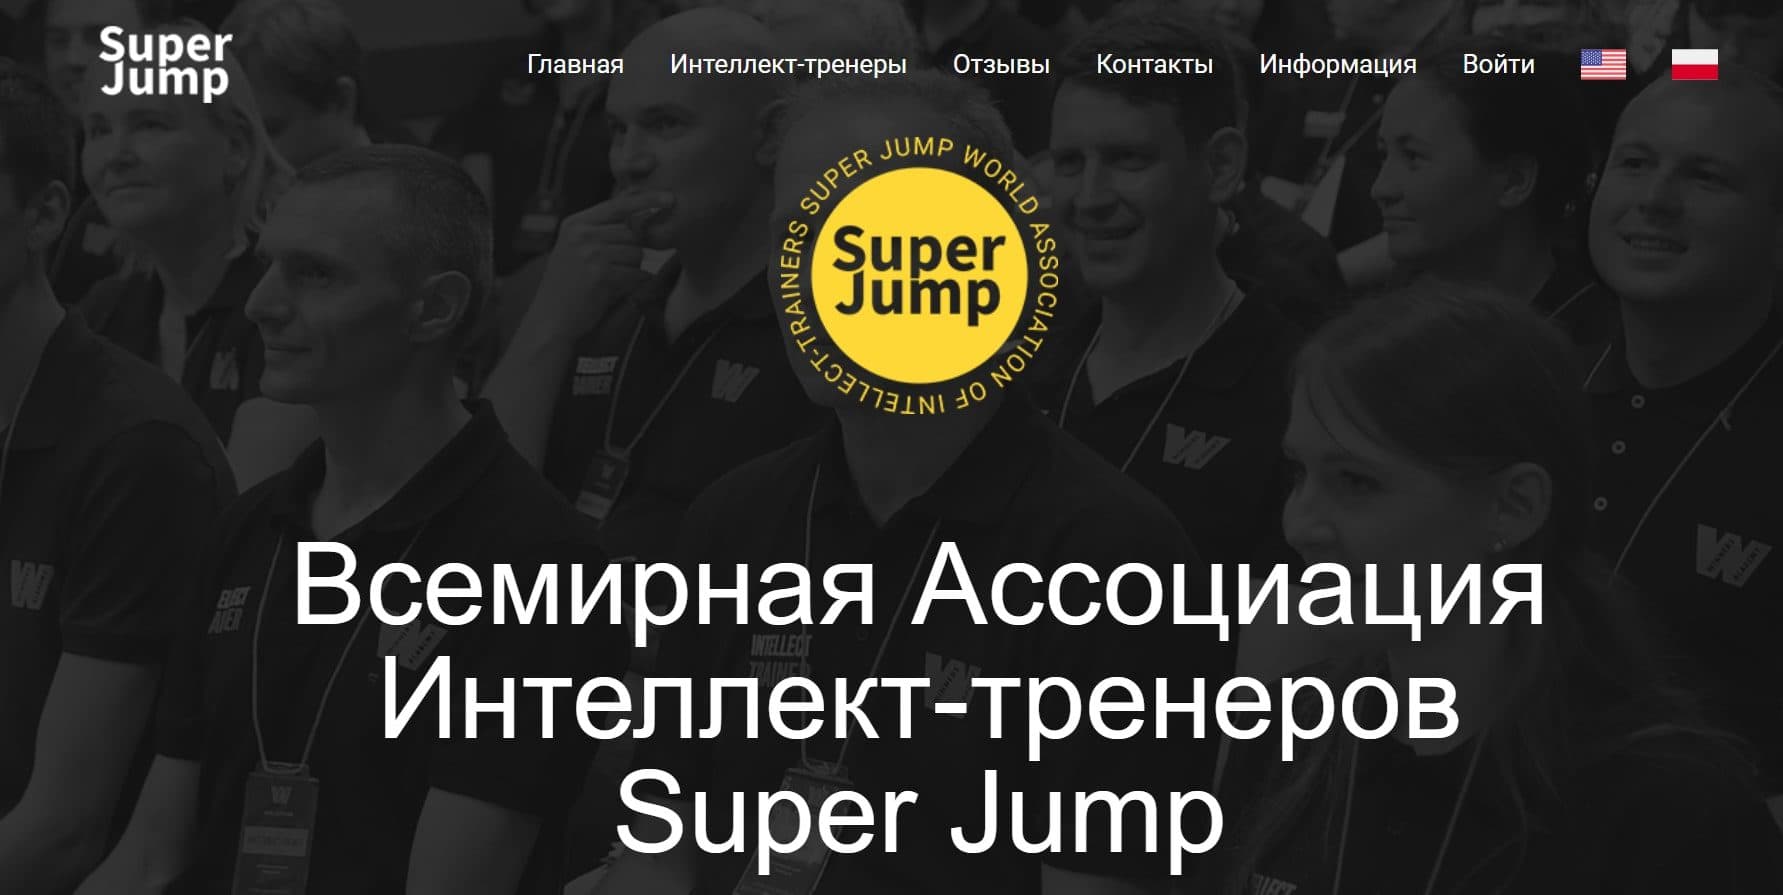 Super Jump сайт